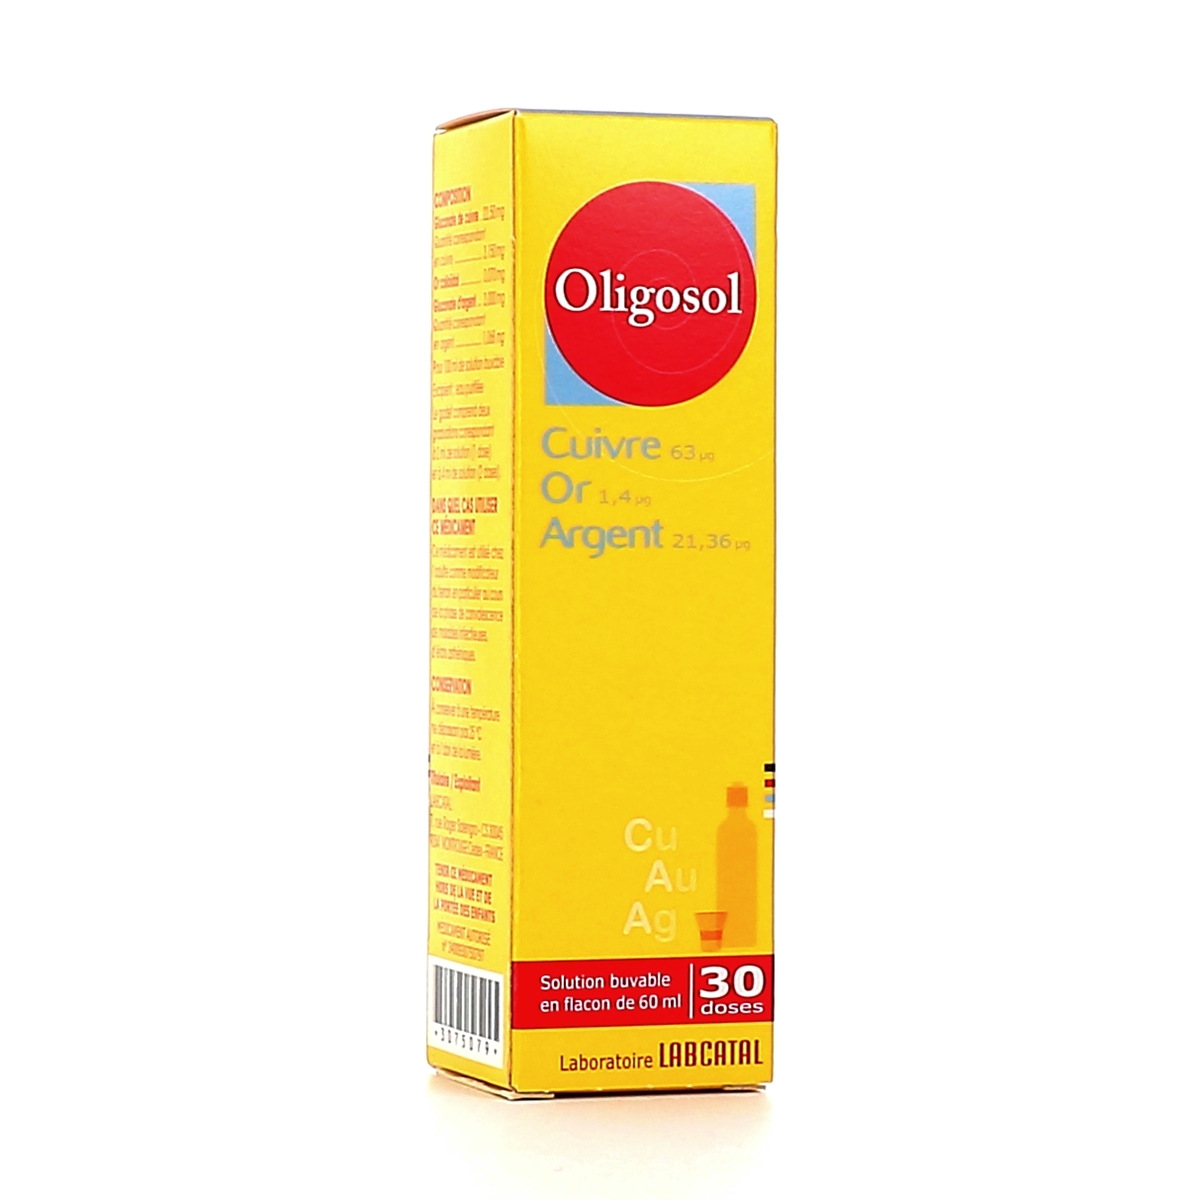 Cuivre-Or-Argent Oligosol 60ml - Pharmacie Anglo-Française